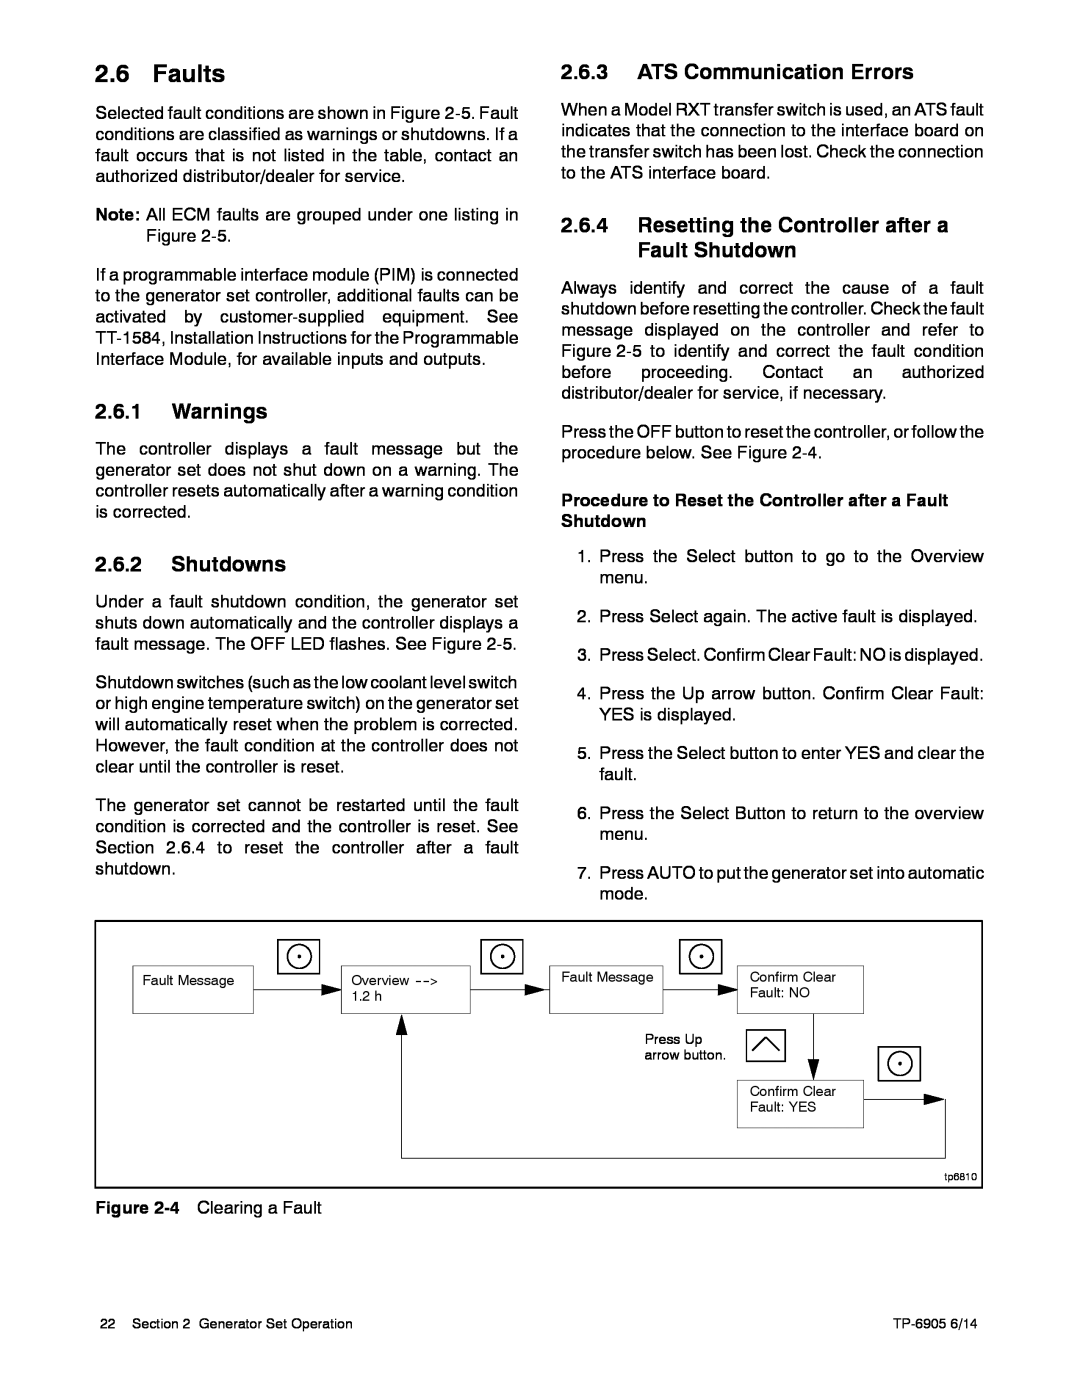 Kohler 24RCL manual Faults, 2.6.1Warnings, 2.6.2Shutdowns, 2.6.3ATS Communication Errors 